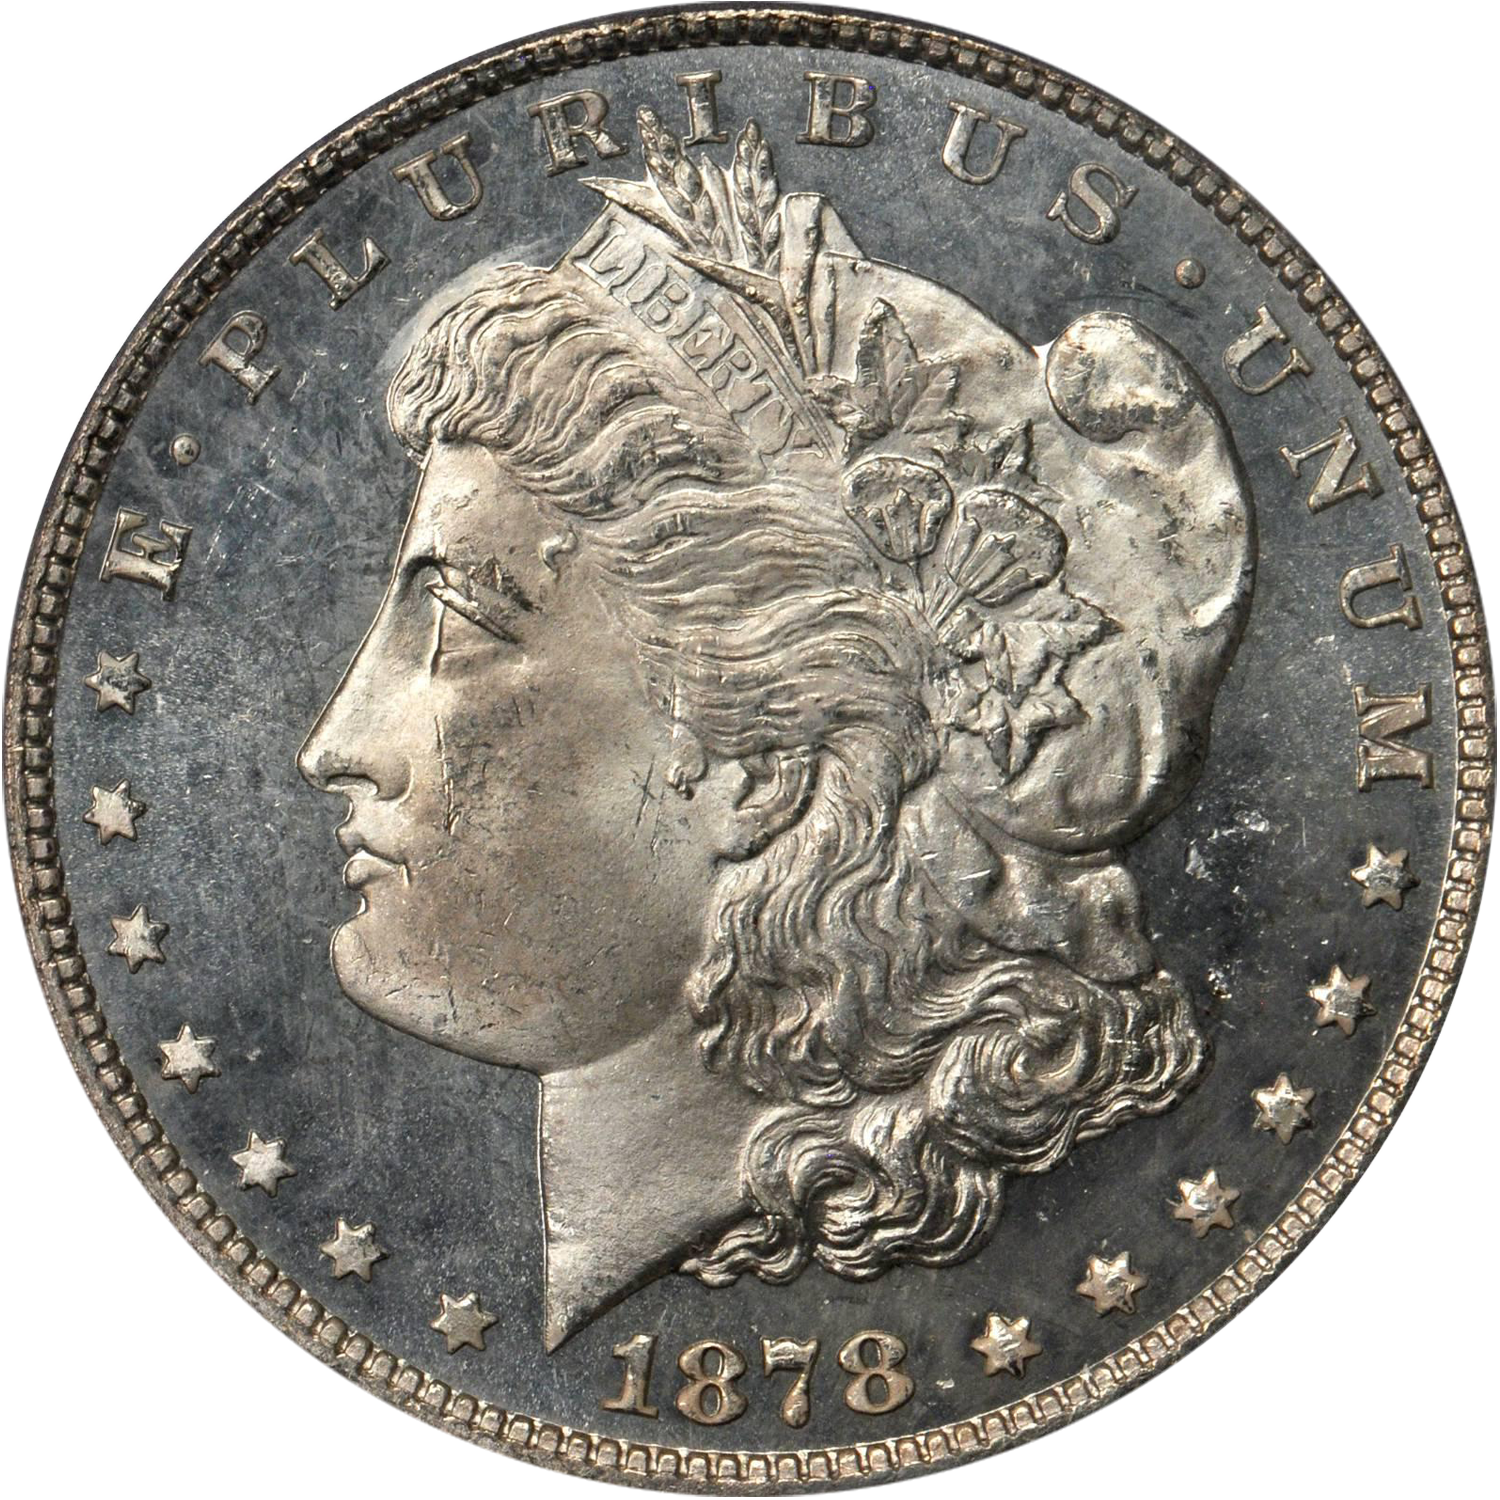 1878 7/8 tf morgan dollar price guide value